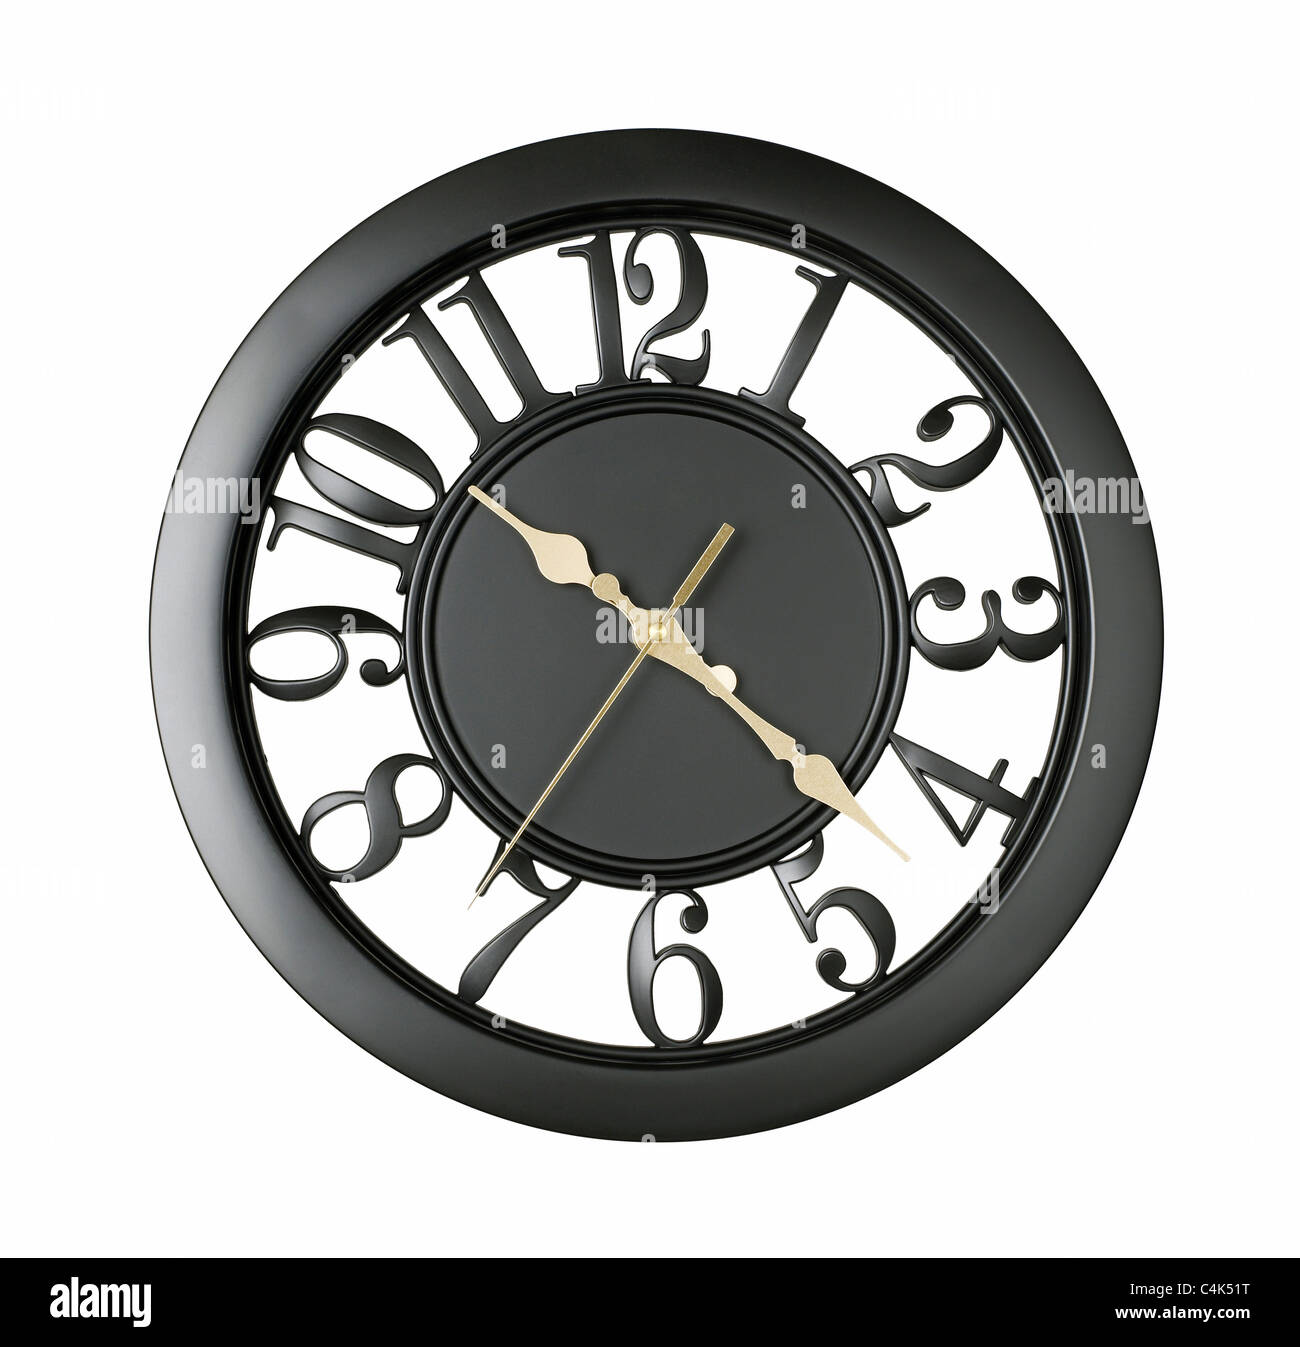 black wall clock Stock Photo